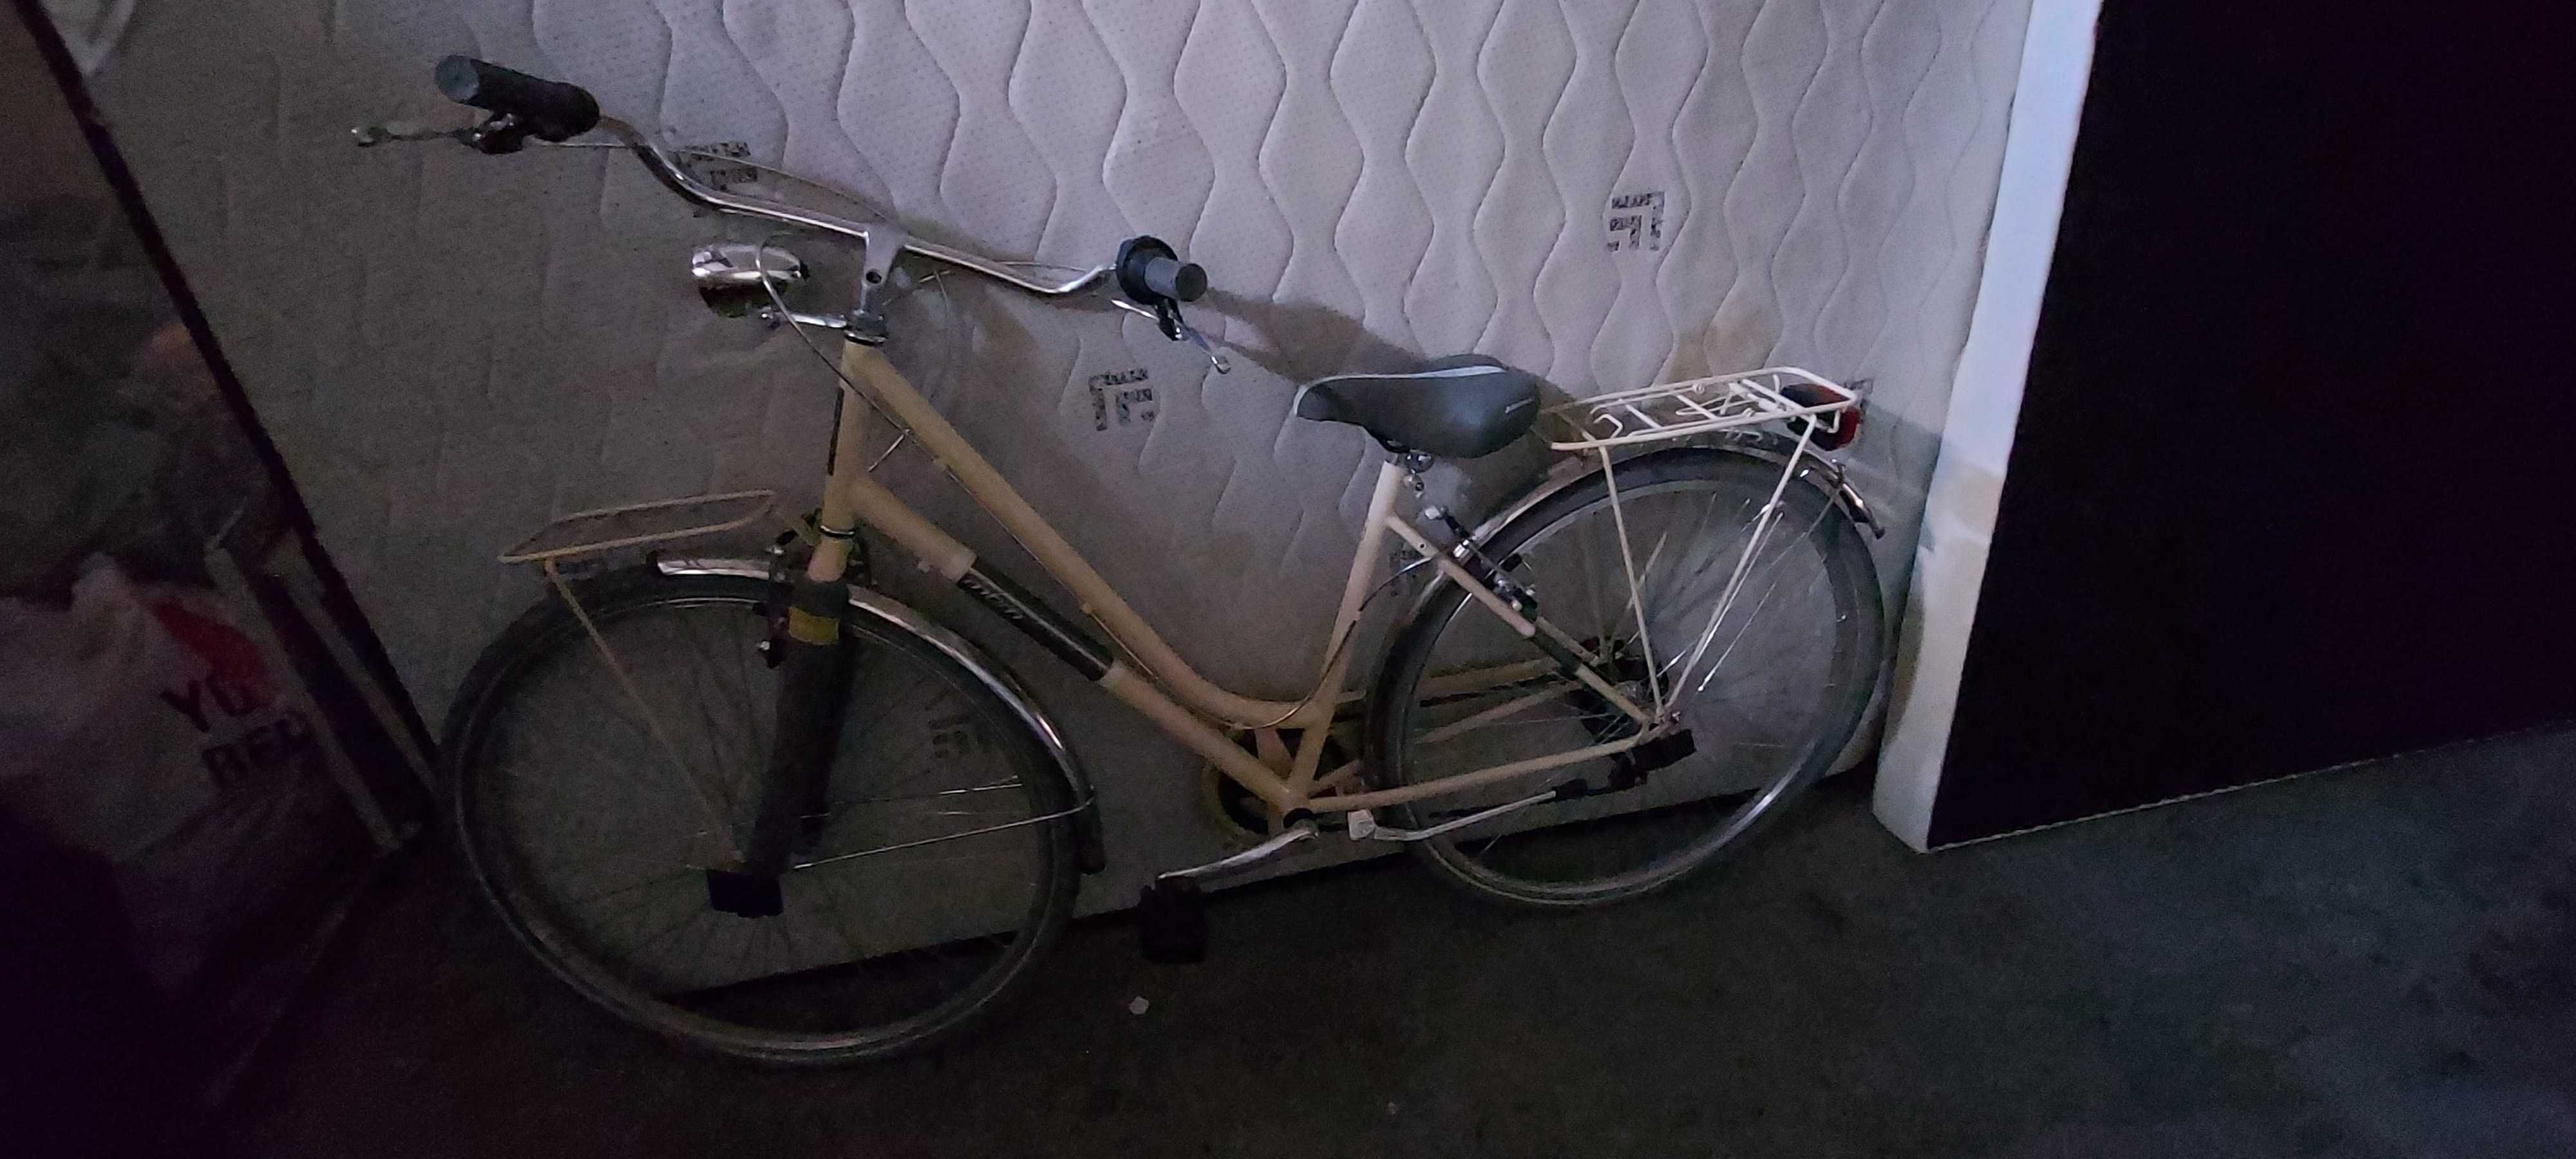 Bicicleta urbana  mbm silvery